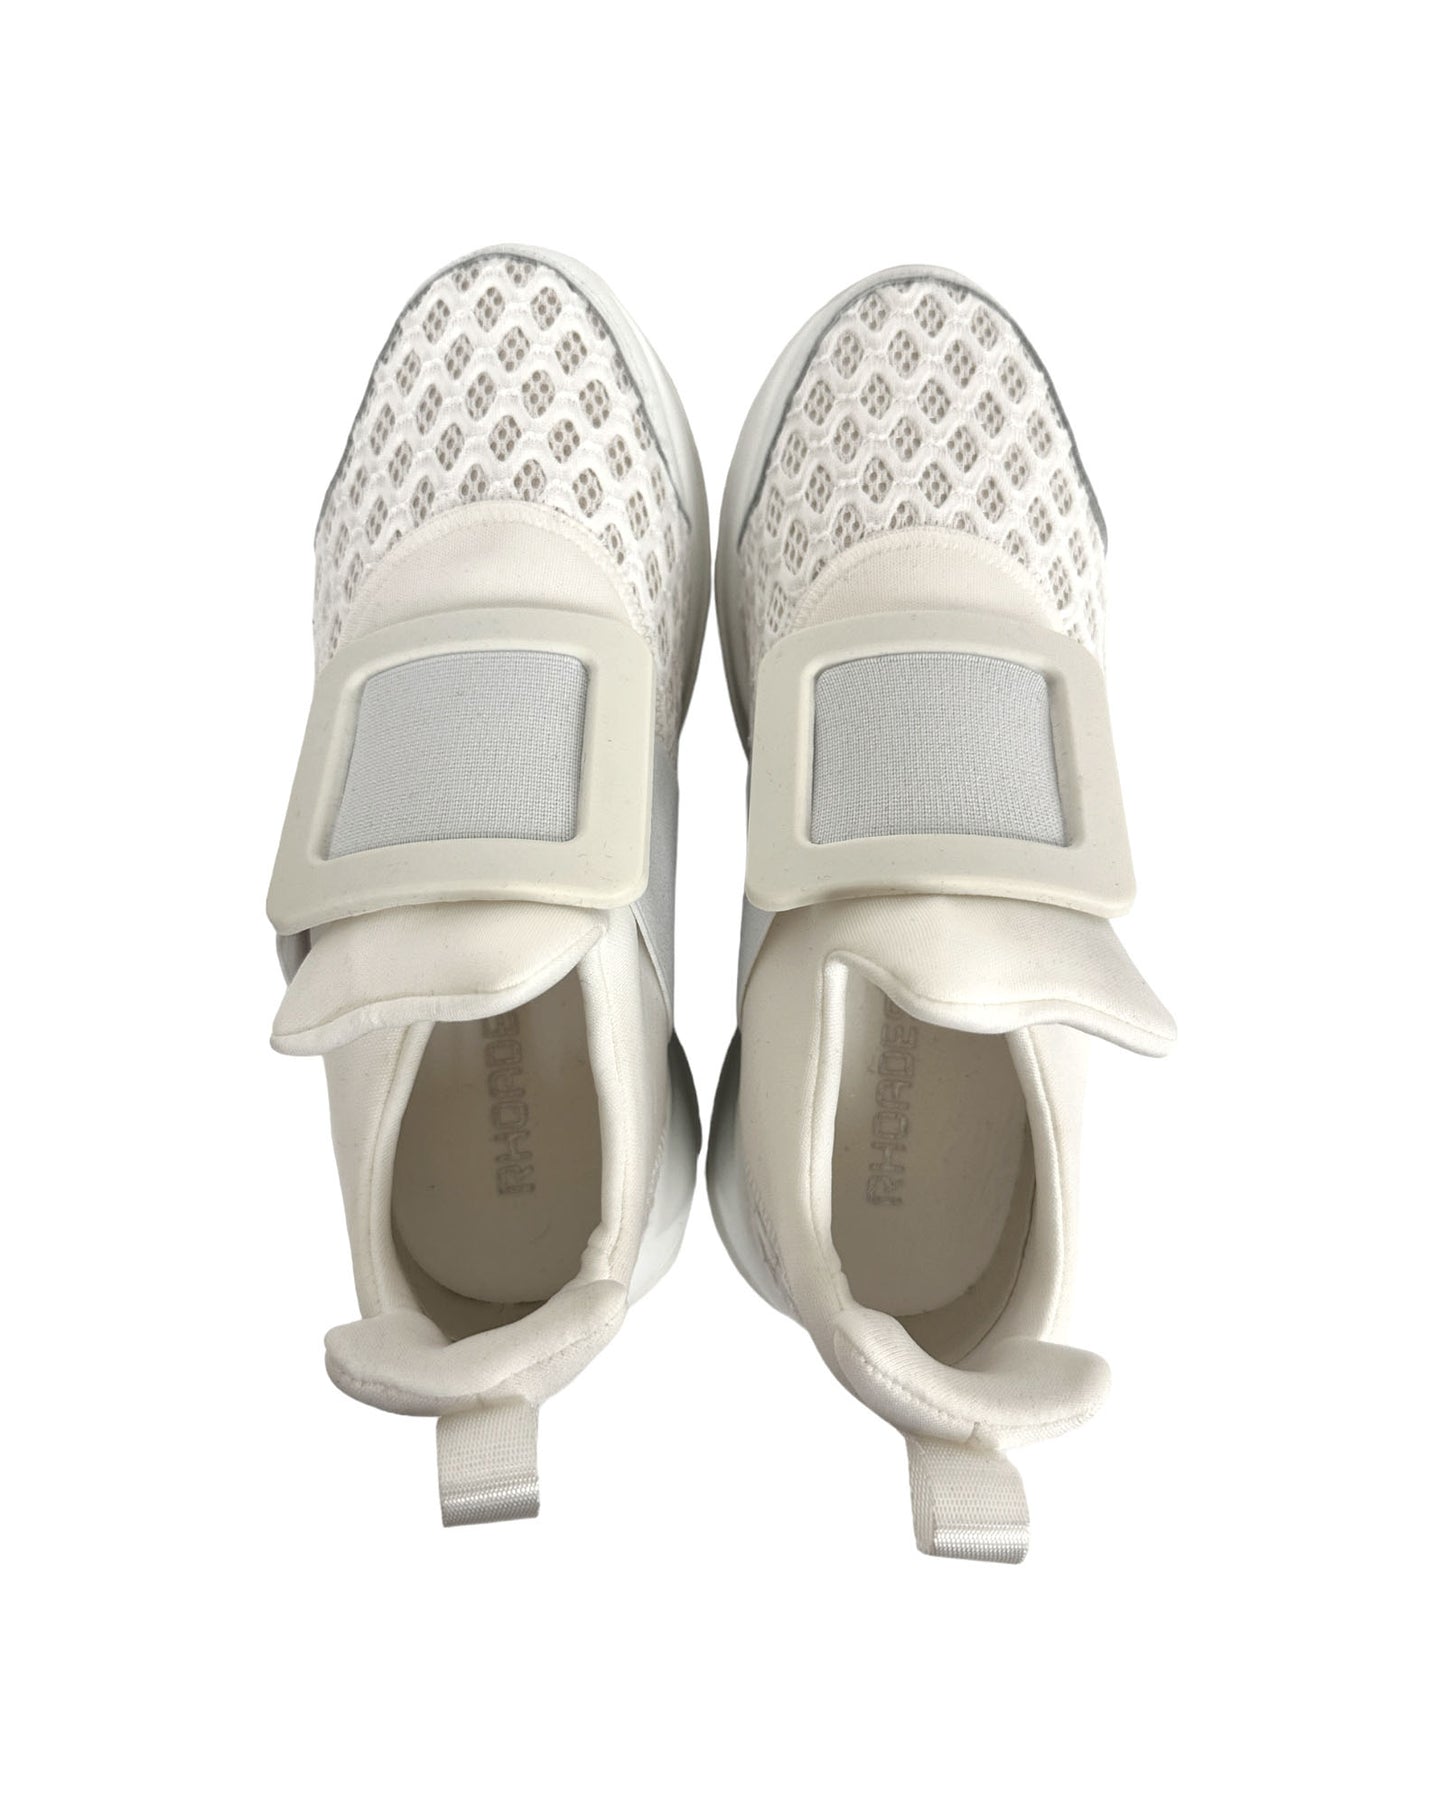 ivory neoprene square buckle sneakers *pre-order*